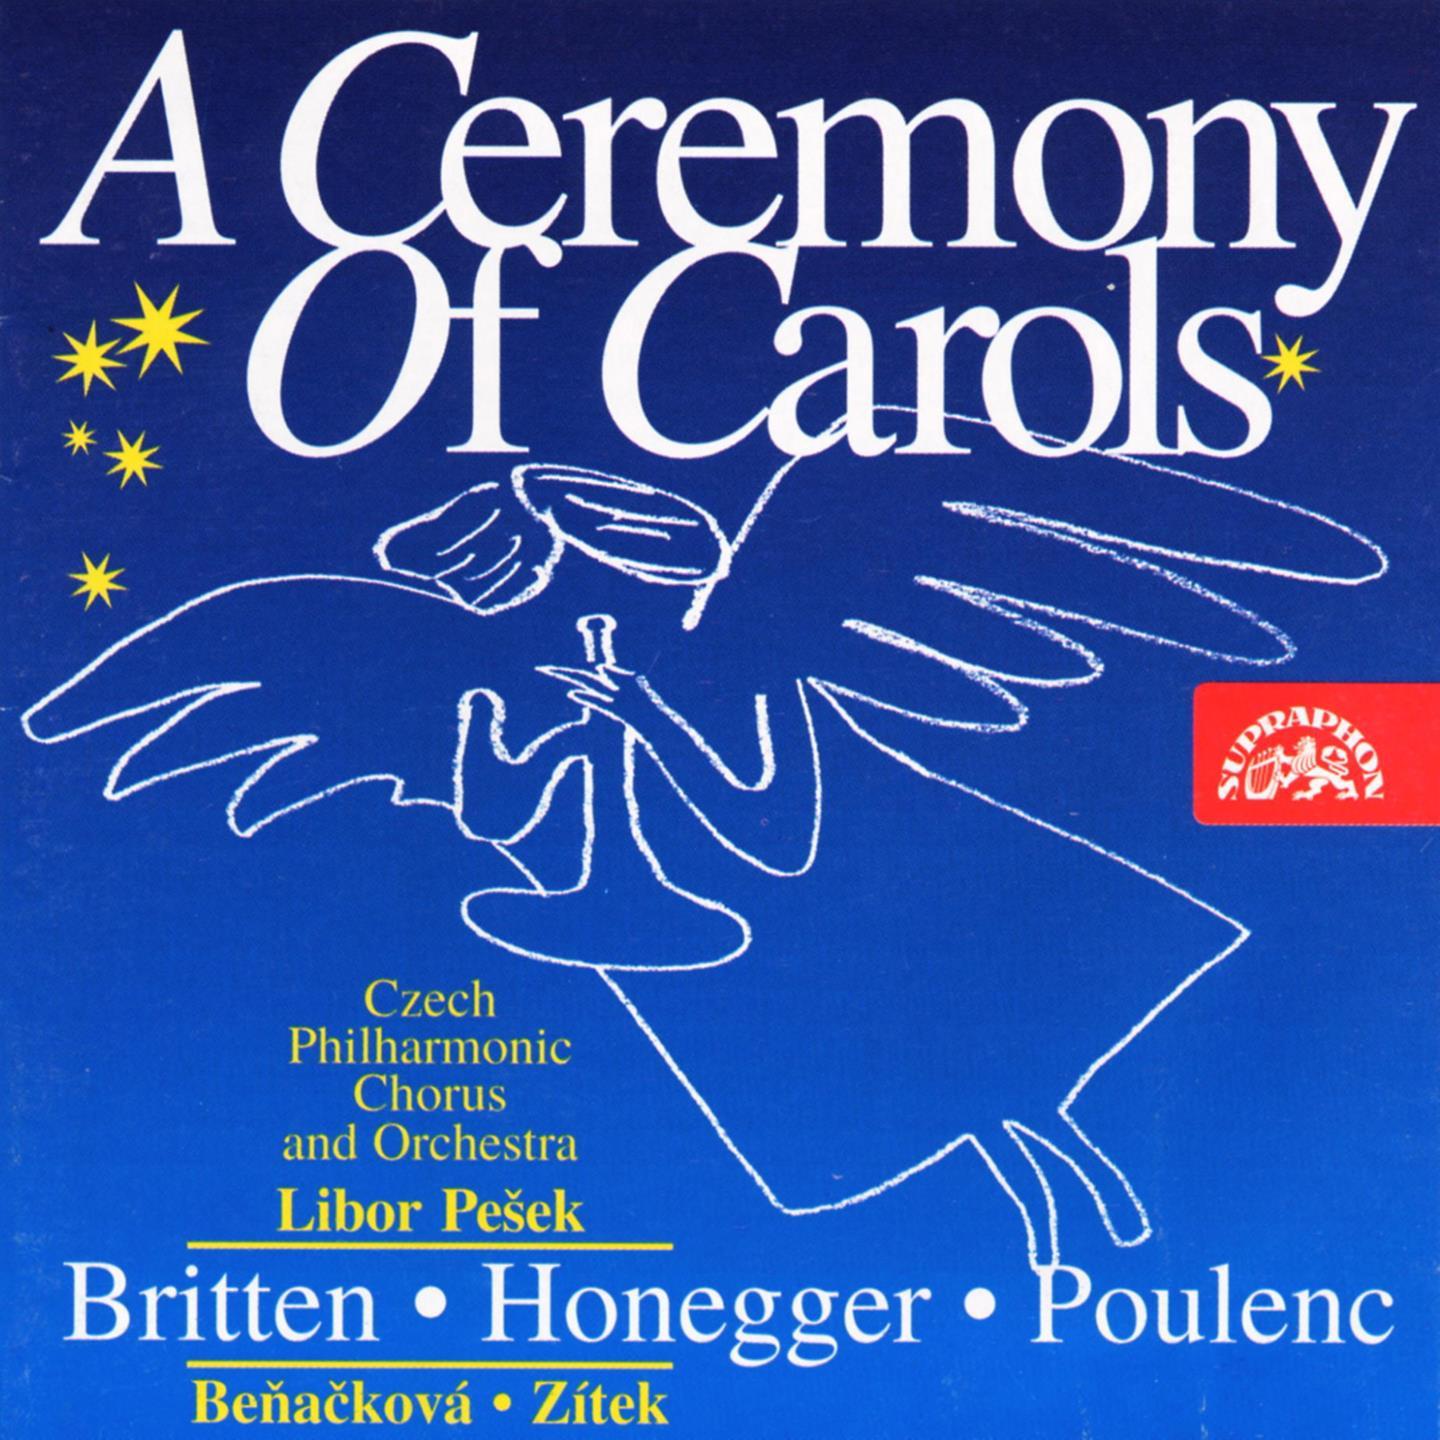 Britten: A Ceremony of Carols  Honegger: Une cantate de No l  Poulenc: Stabat Mater